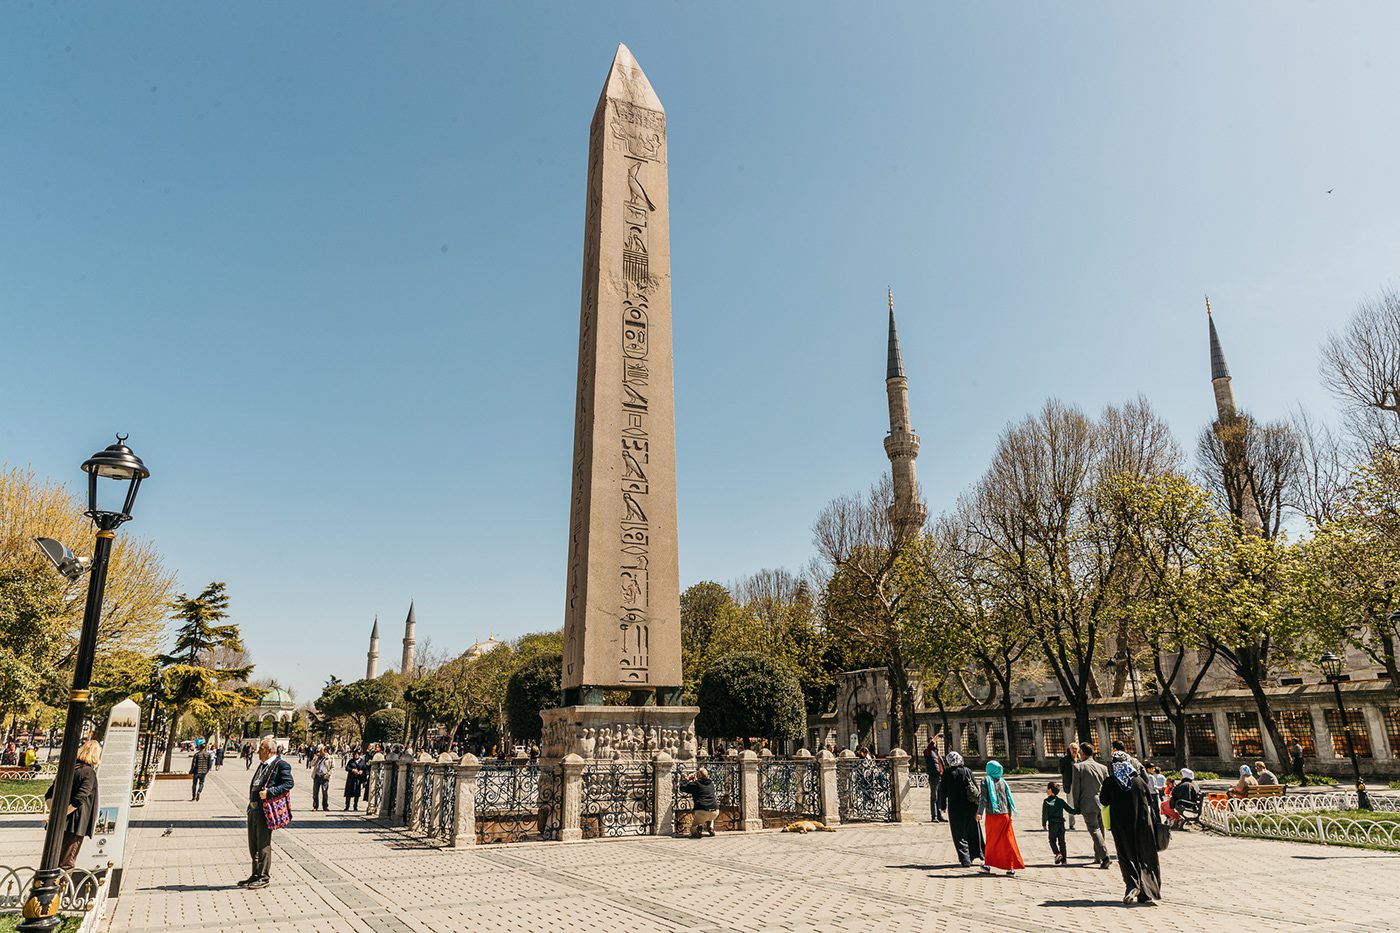 Экскурсия По Следам Султана в Стамбуле